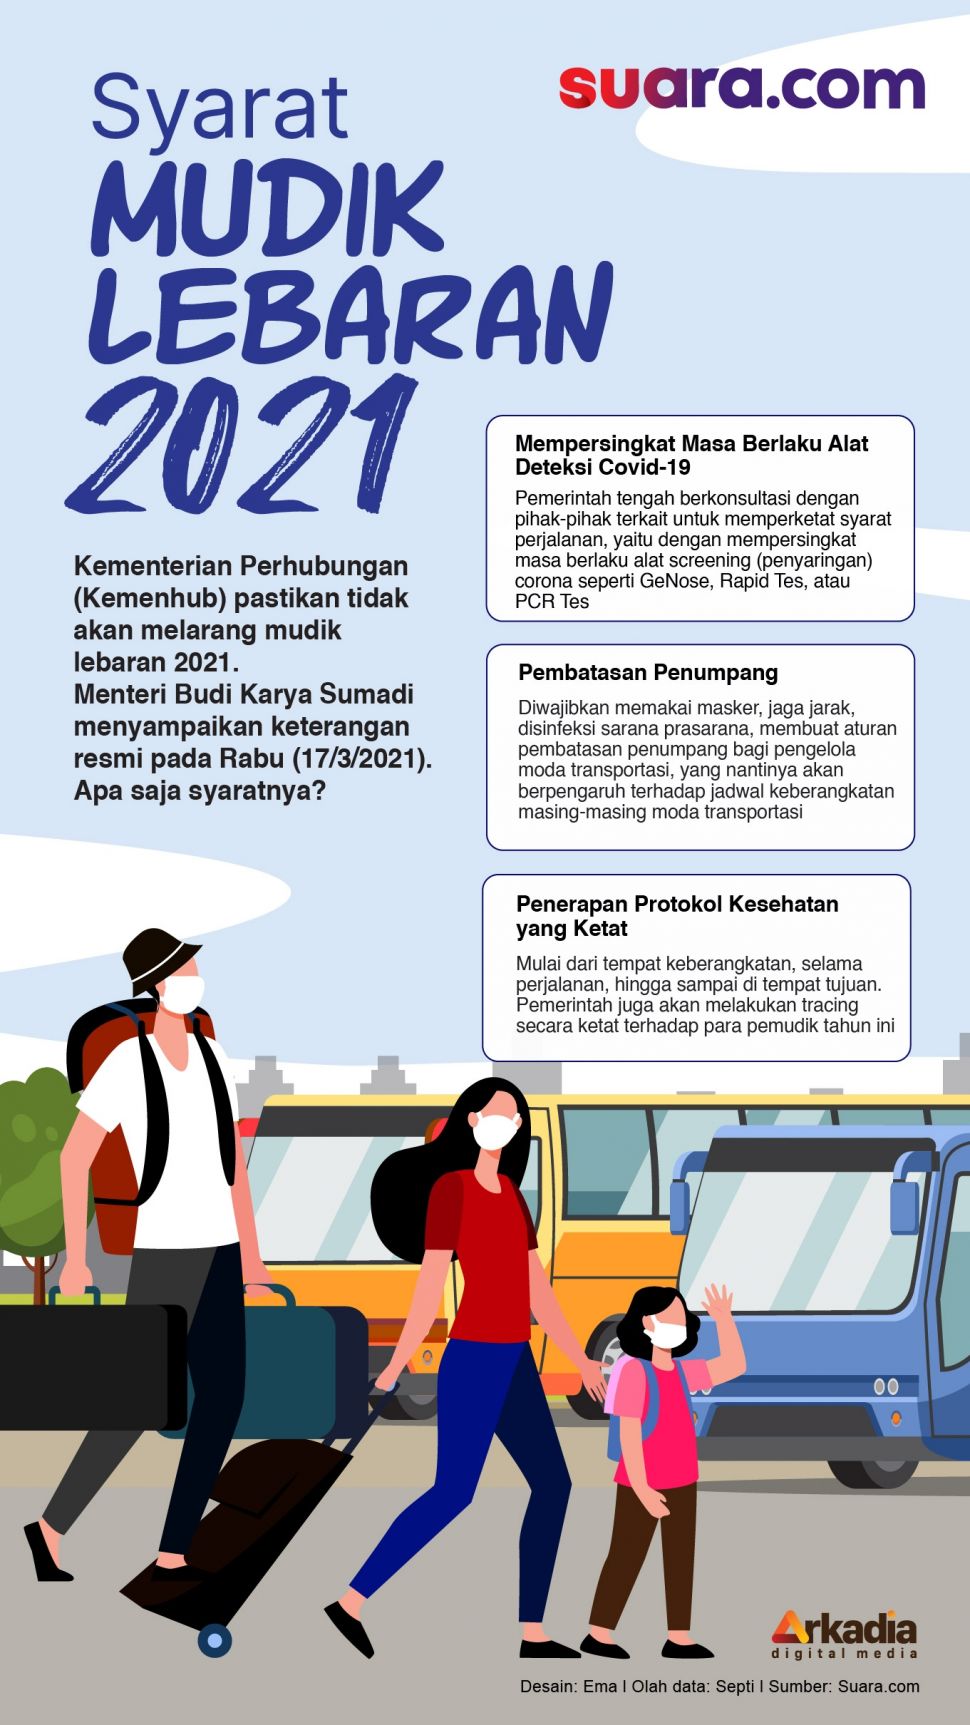 Mudik 2021 transportasi aturan Mudik Lebaran